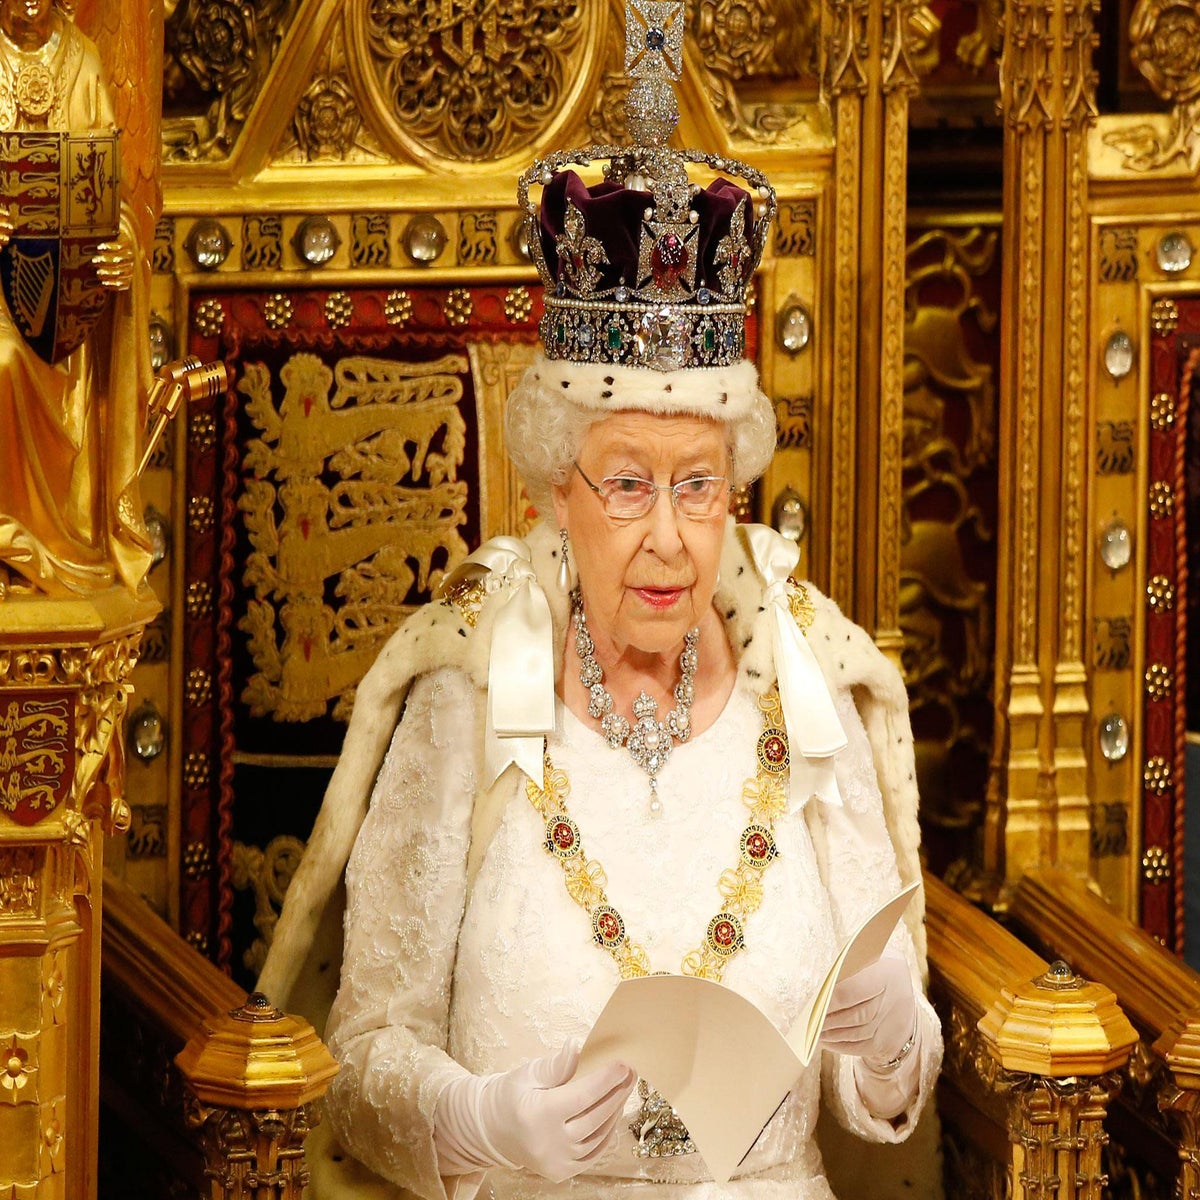 Queen Elizabeth II's Underwear For Sale on